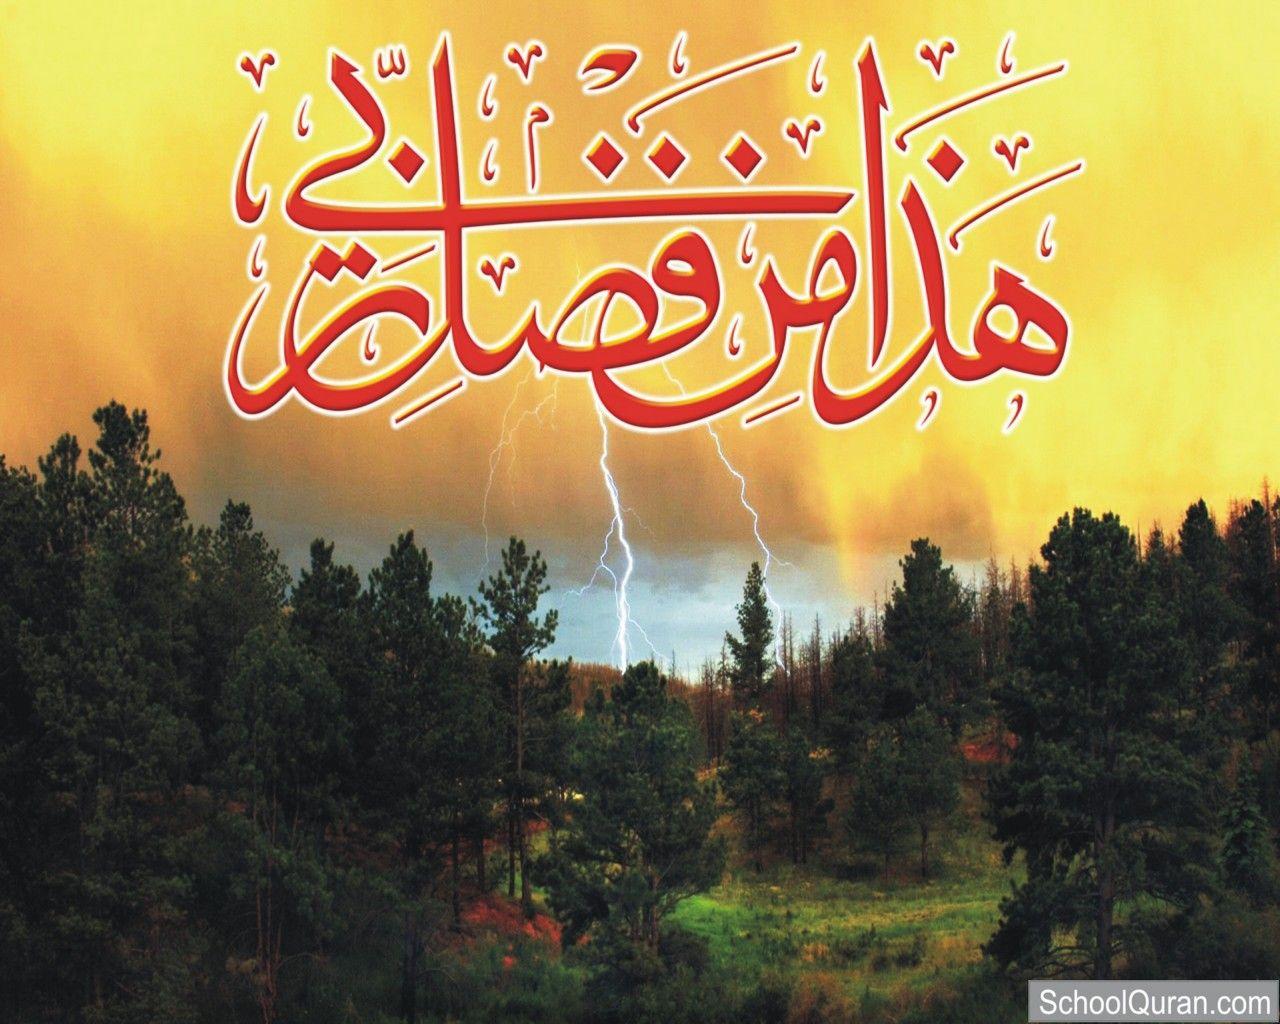 Islamic Wallpaper HD. Islam Wallpaper. Islamic Wallpaper Free